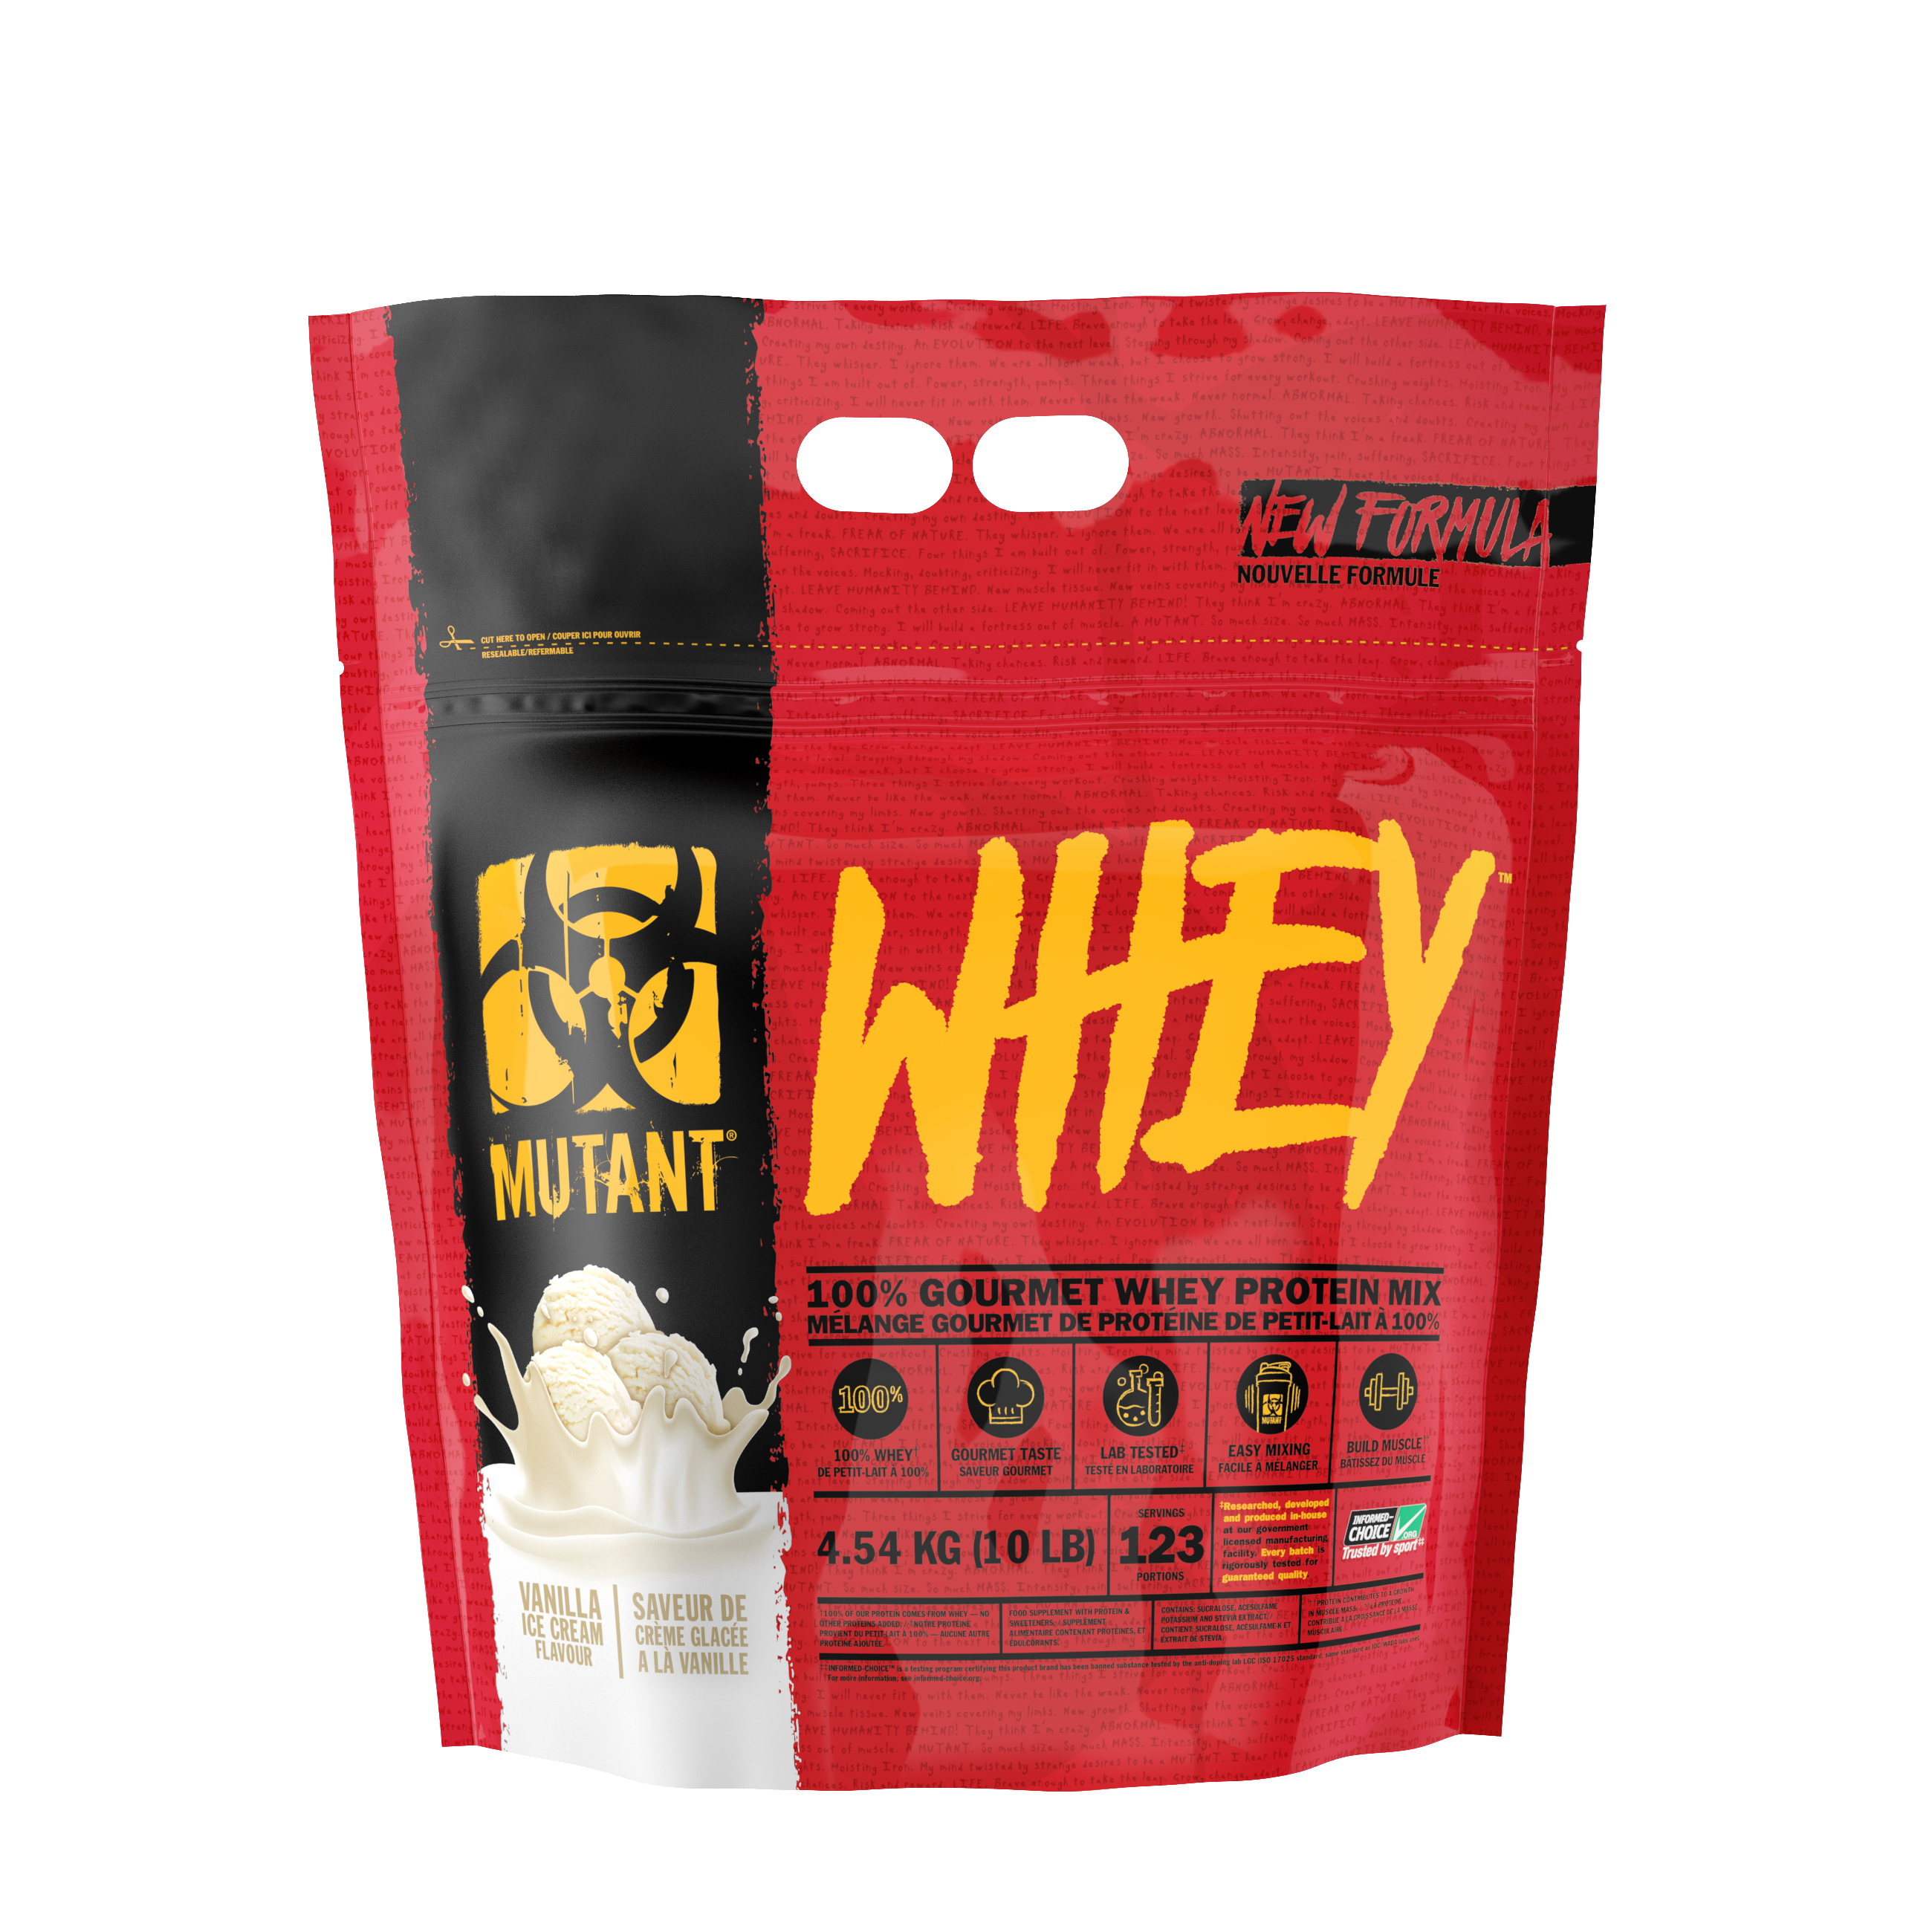 Mutant Whey (10 lbs) Whey Protein Vanilla Ice Cream Mutant